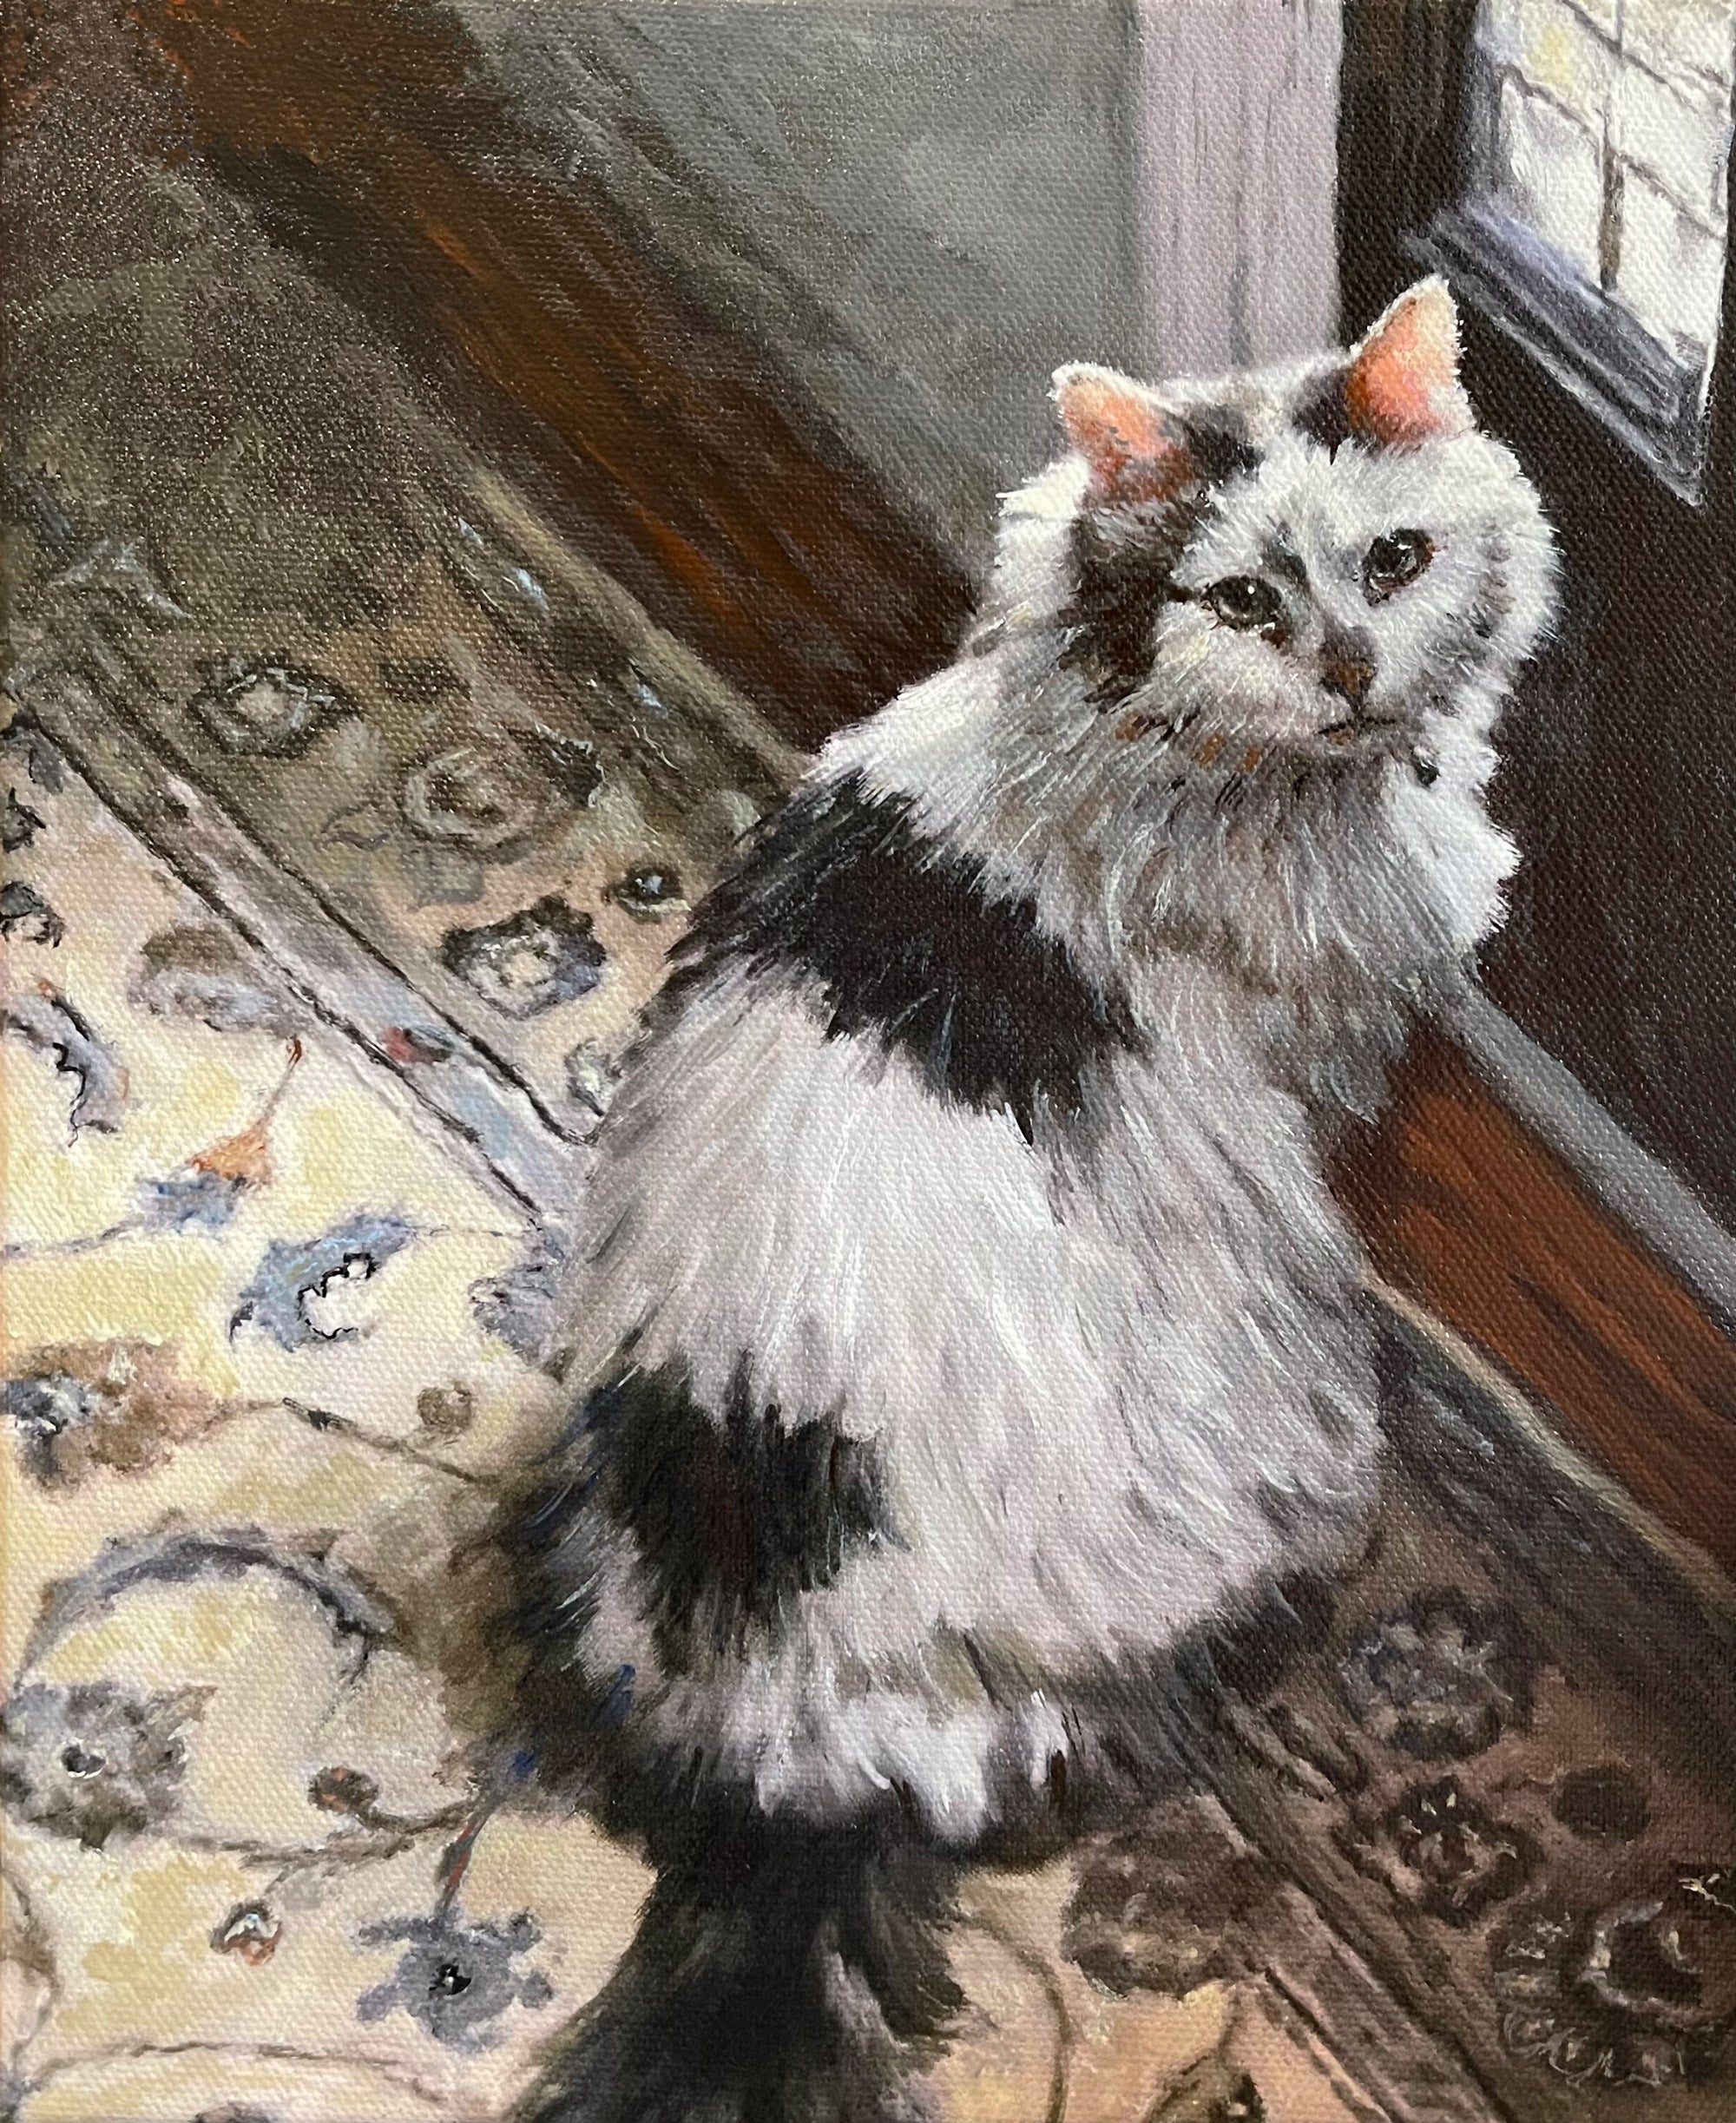 cat portrait in oil